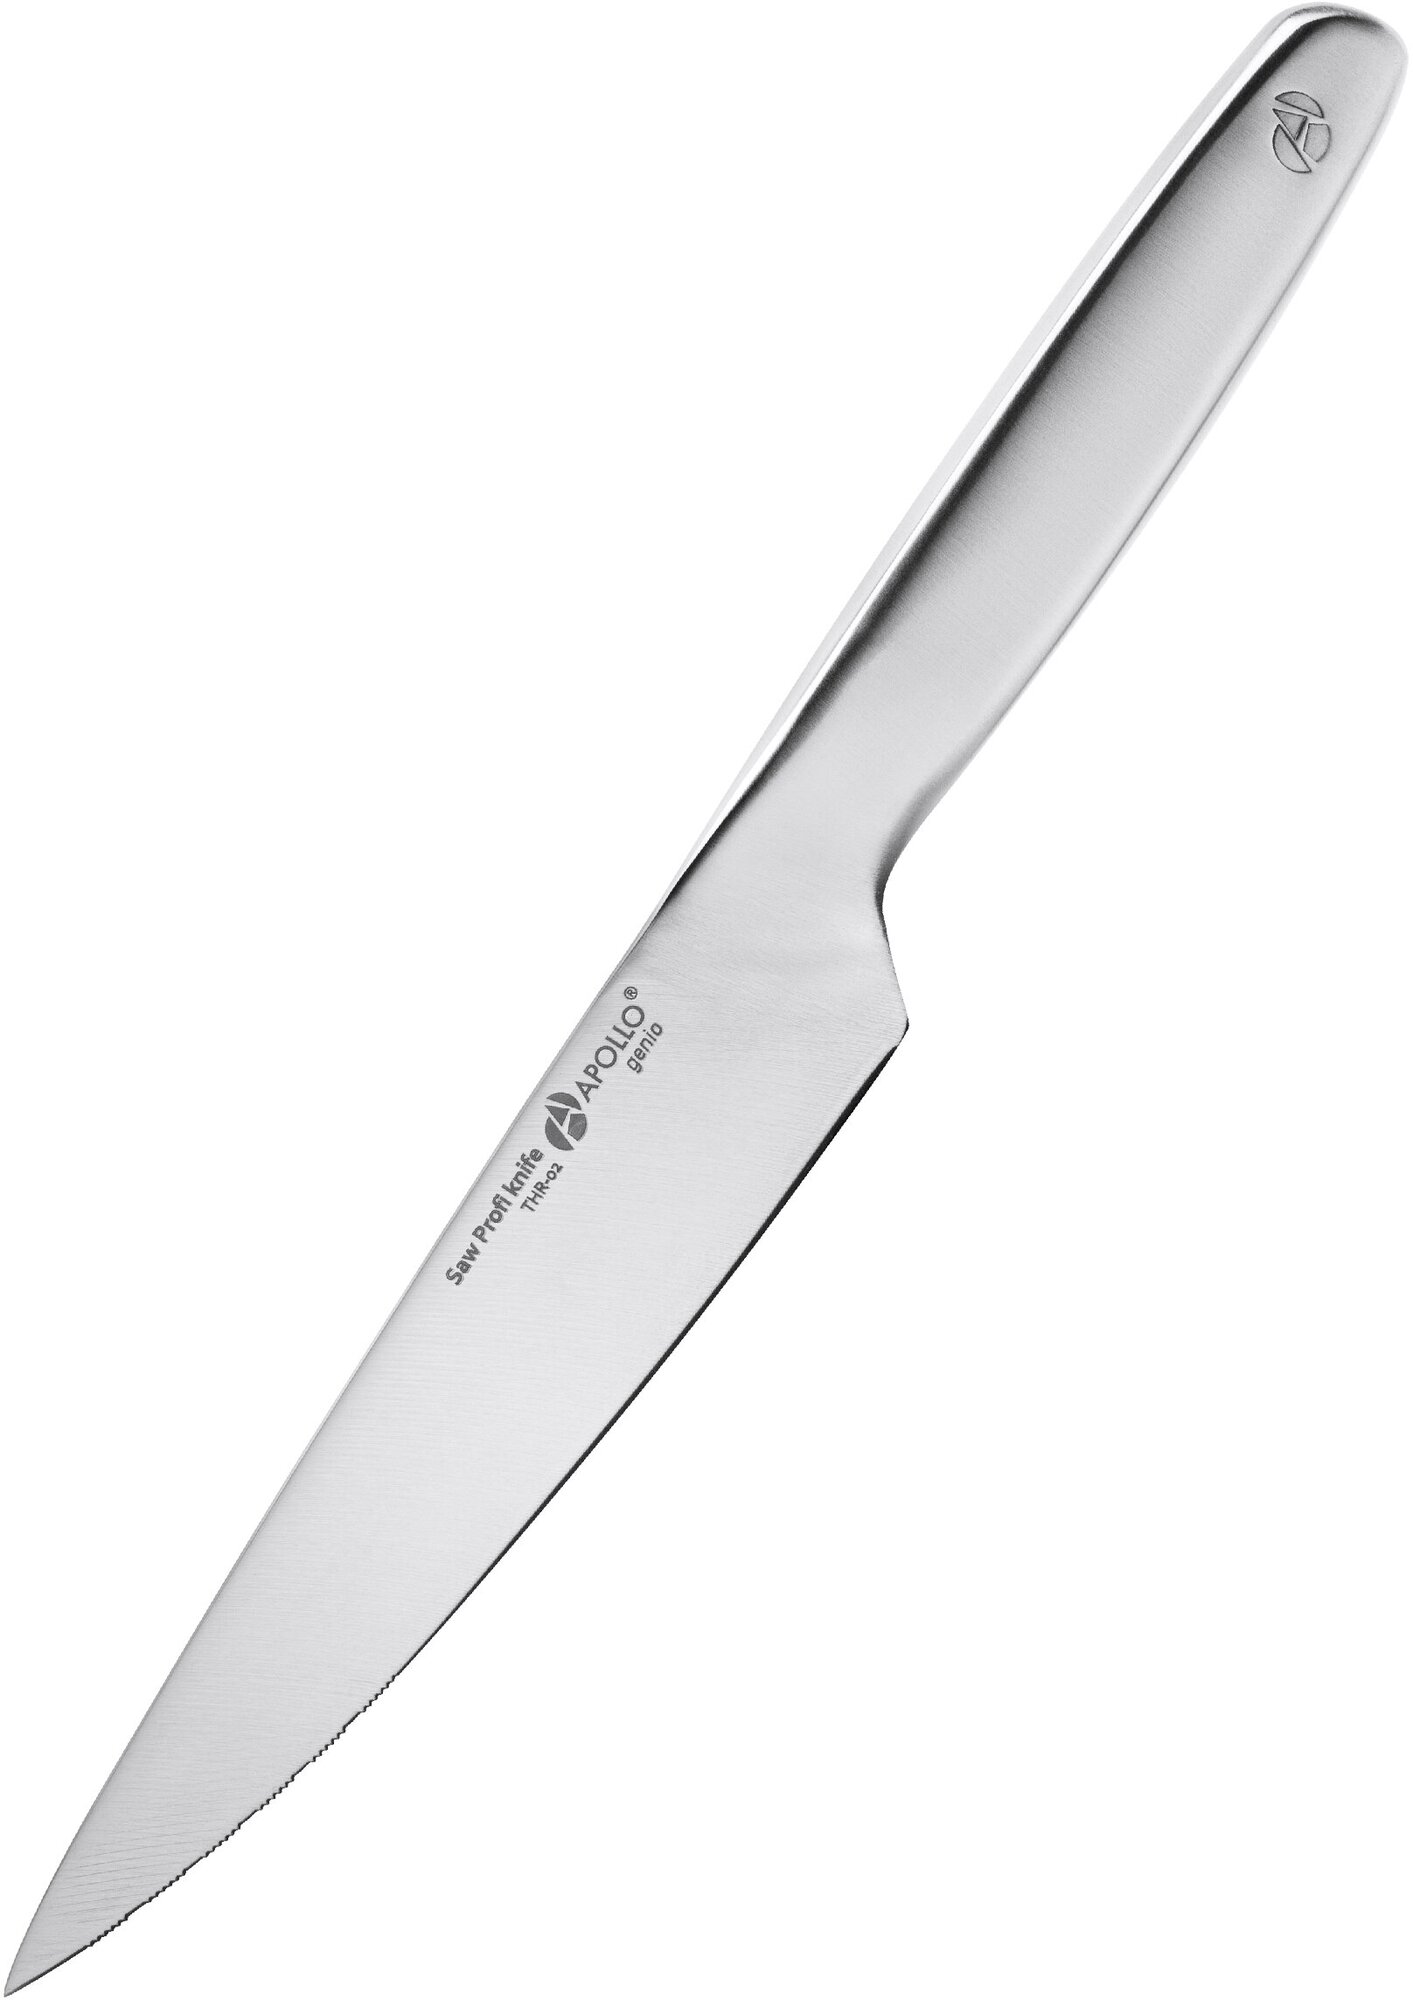 Нож Apollo THR-02 genio "Thor" кухонный 15см